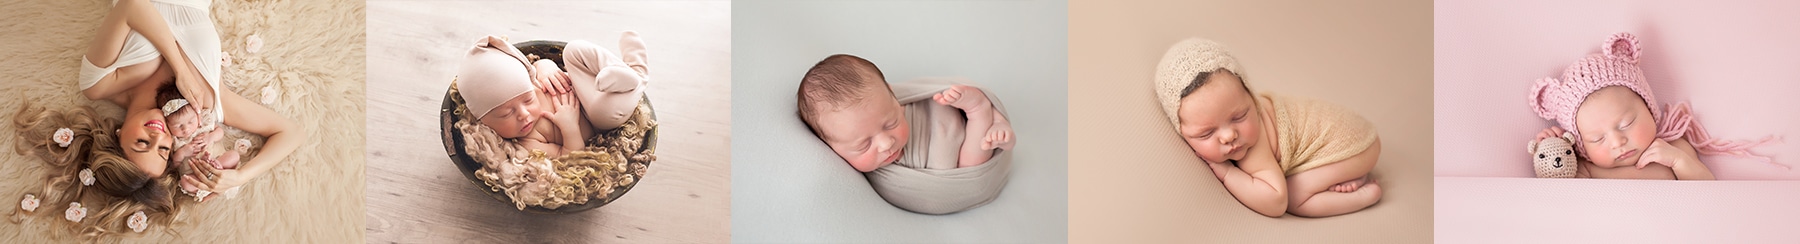 WORKSHOP NEWBORN PETIT MONDE KRISTINA RECHE FOTOGRAFIA 500 - Newborn